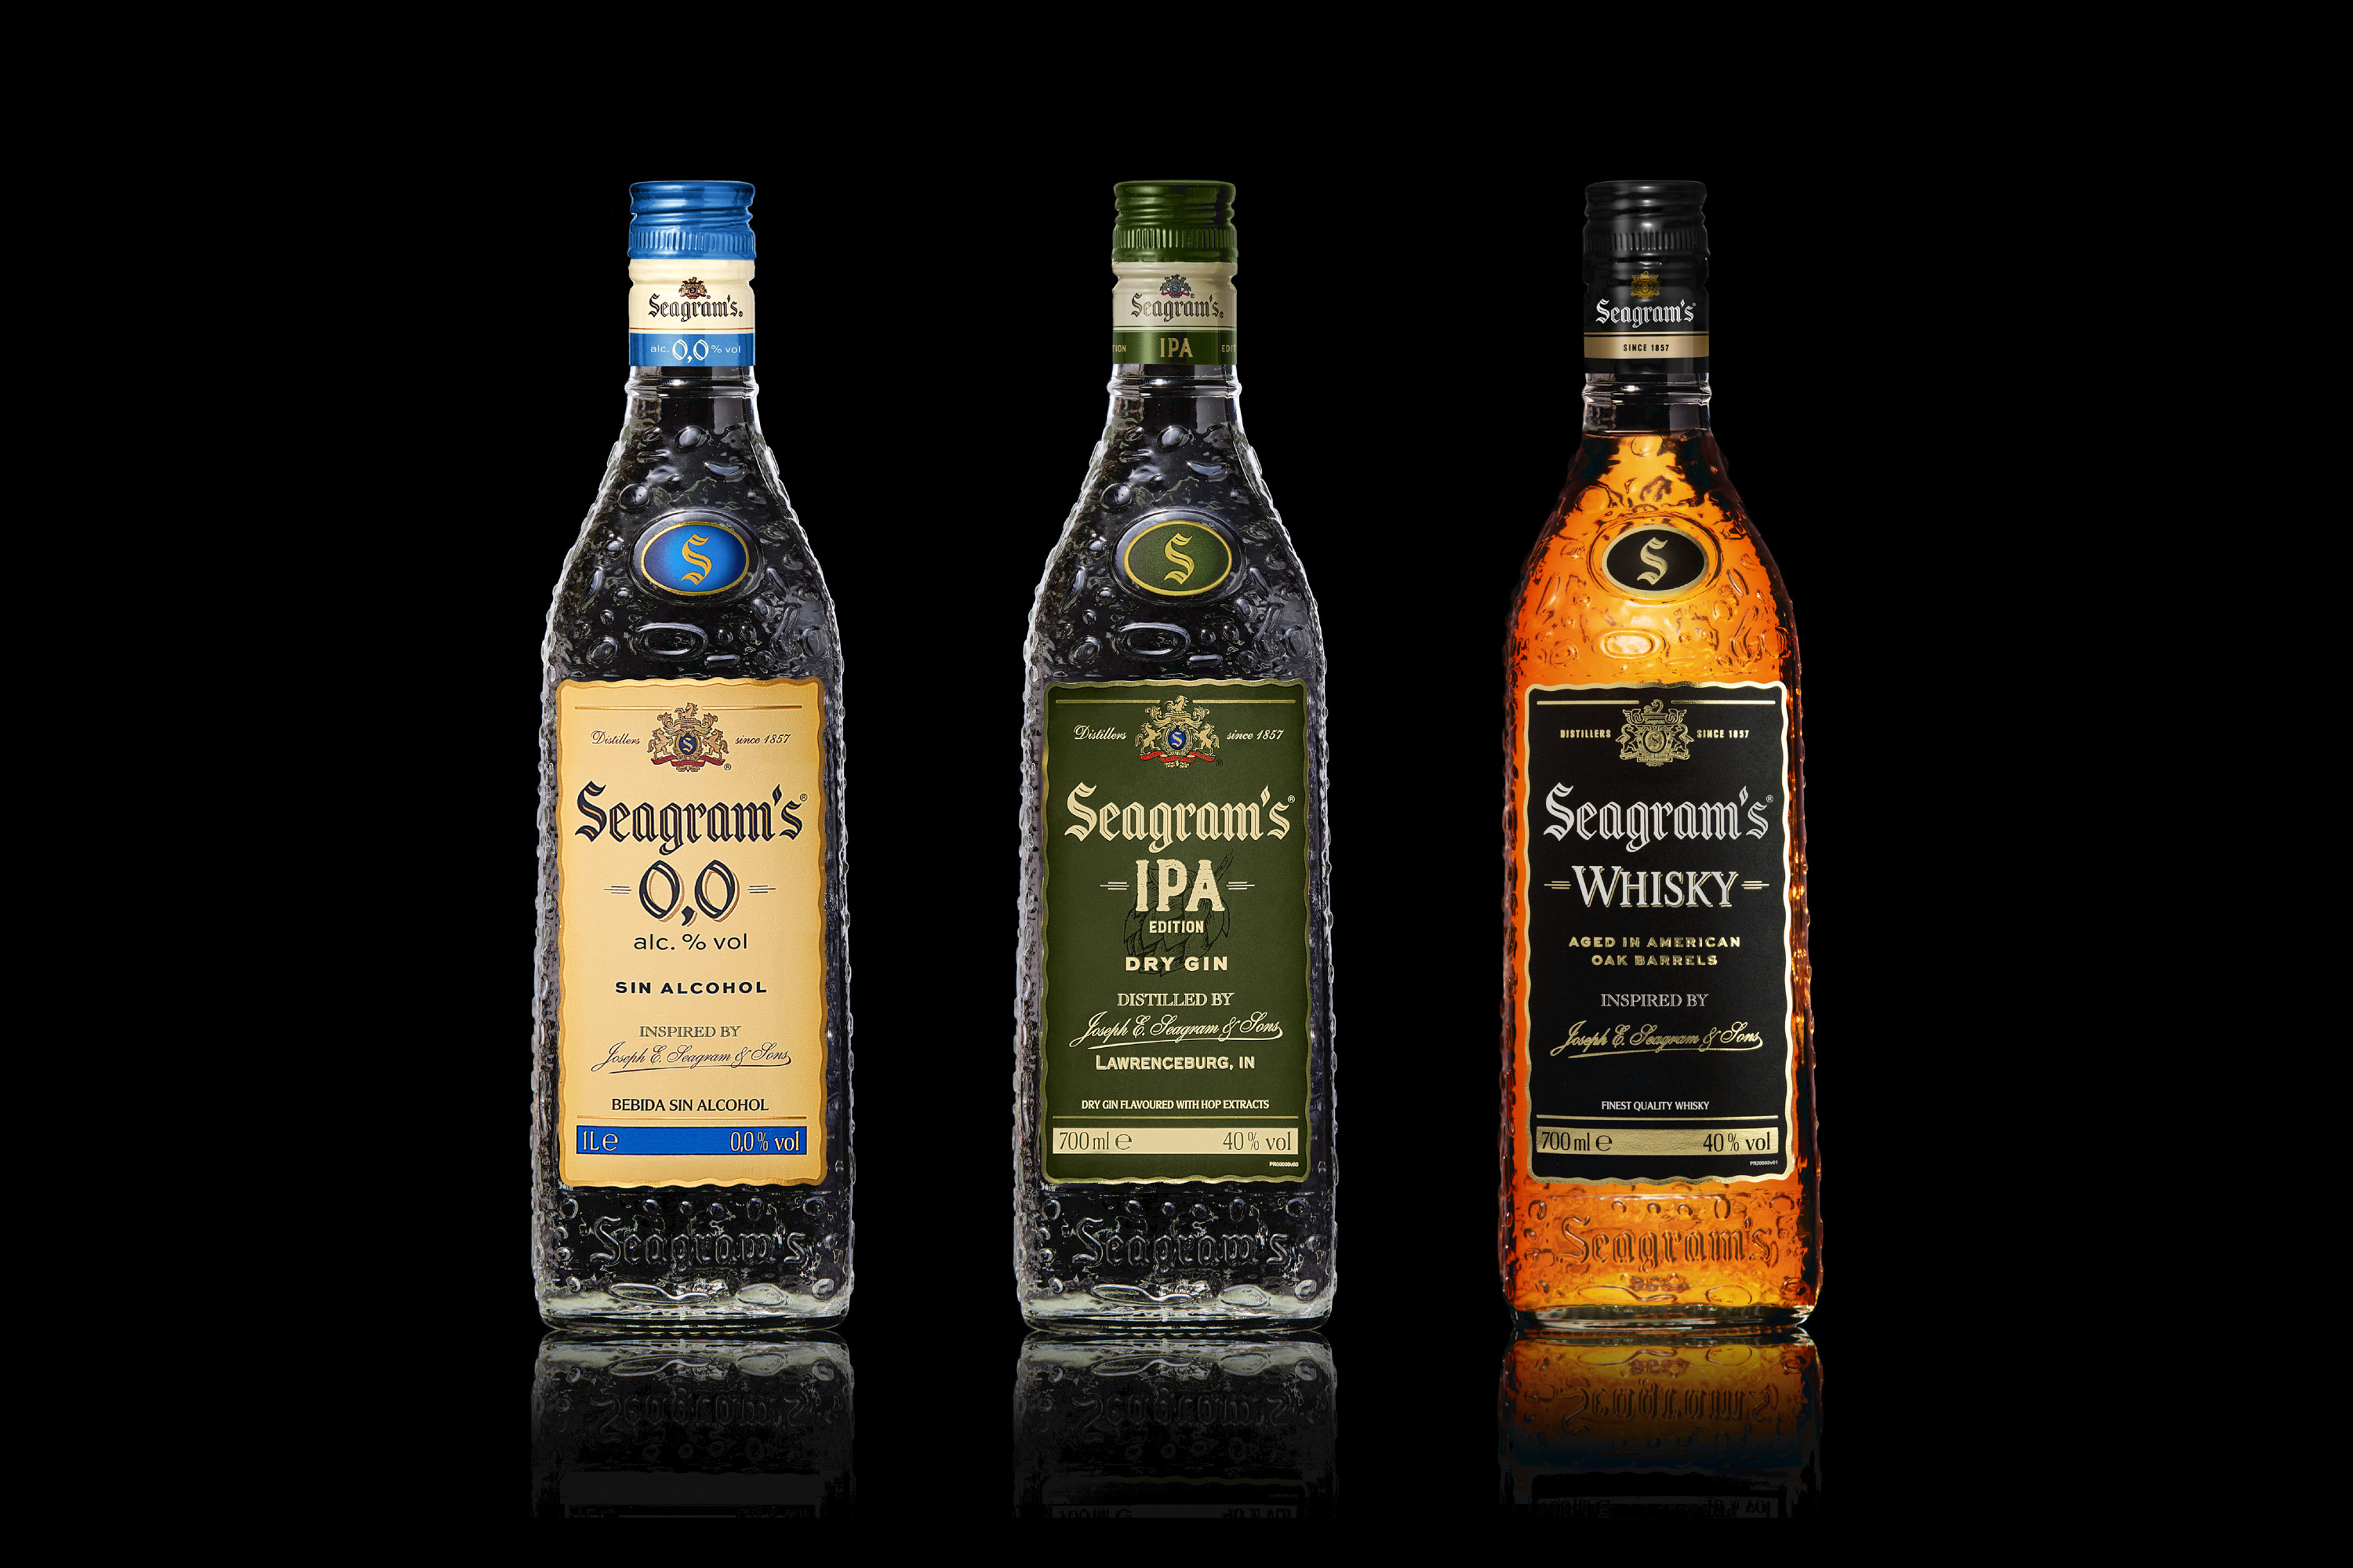 Seagram’s Brand Extension: Innovating New Bottle Designs